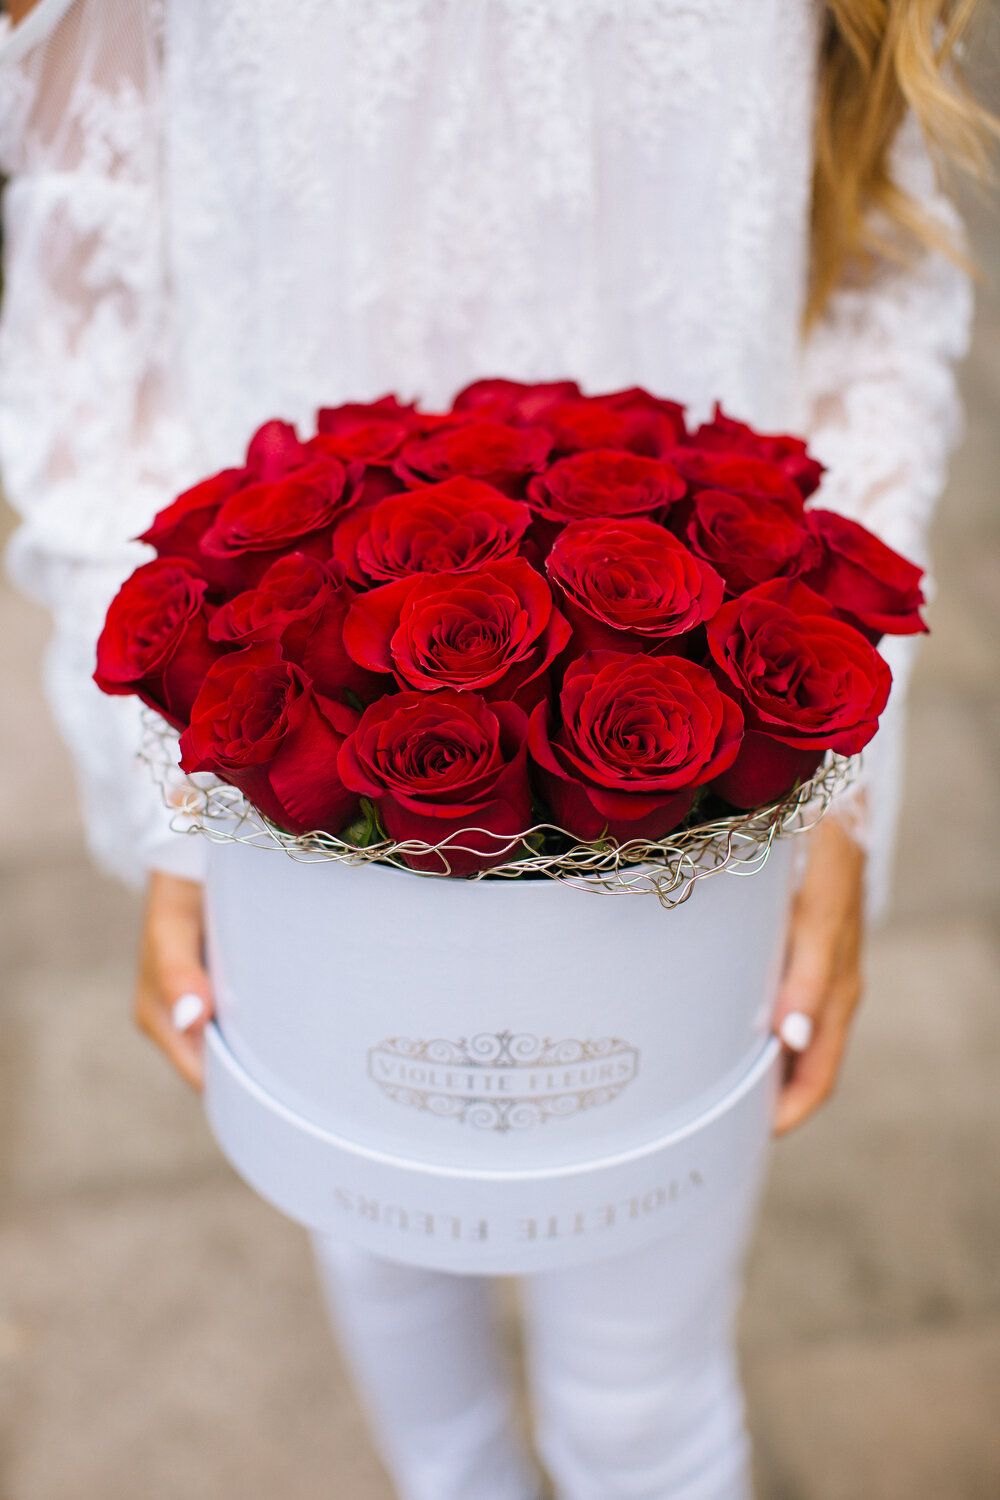 red-roses-hatbox-roseville-sacramento-california-luxury-gift-wedding-event-designer-hatbox-gift-violette-fleurs-anna-perevertaylo.jpg